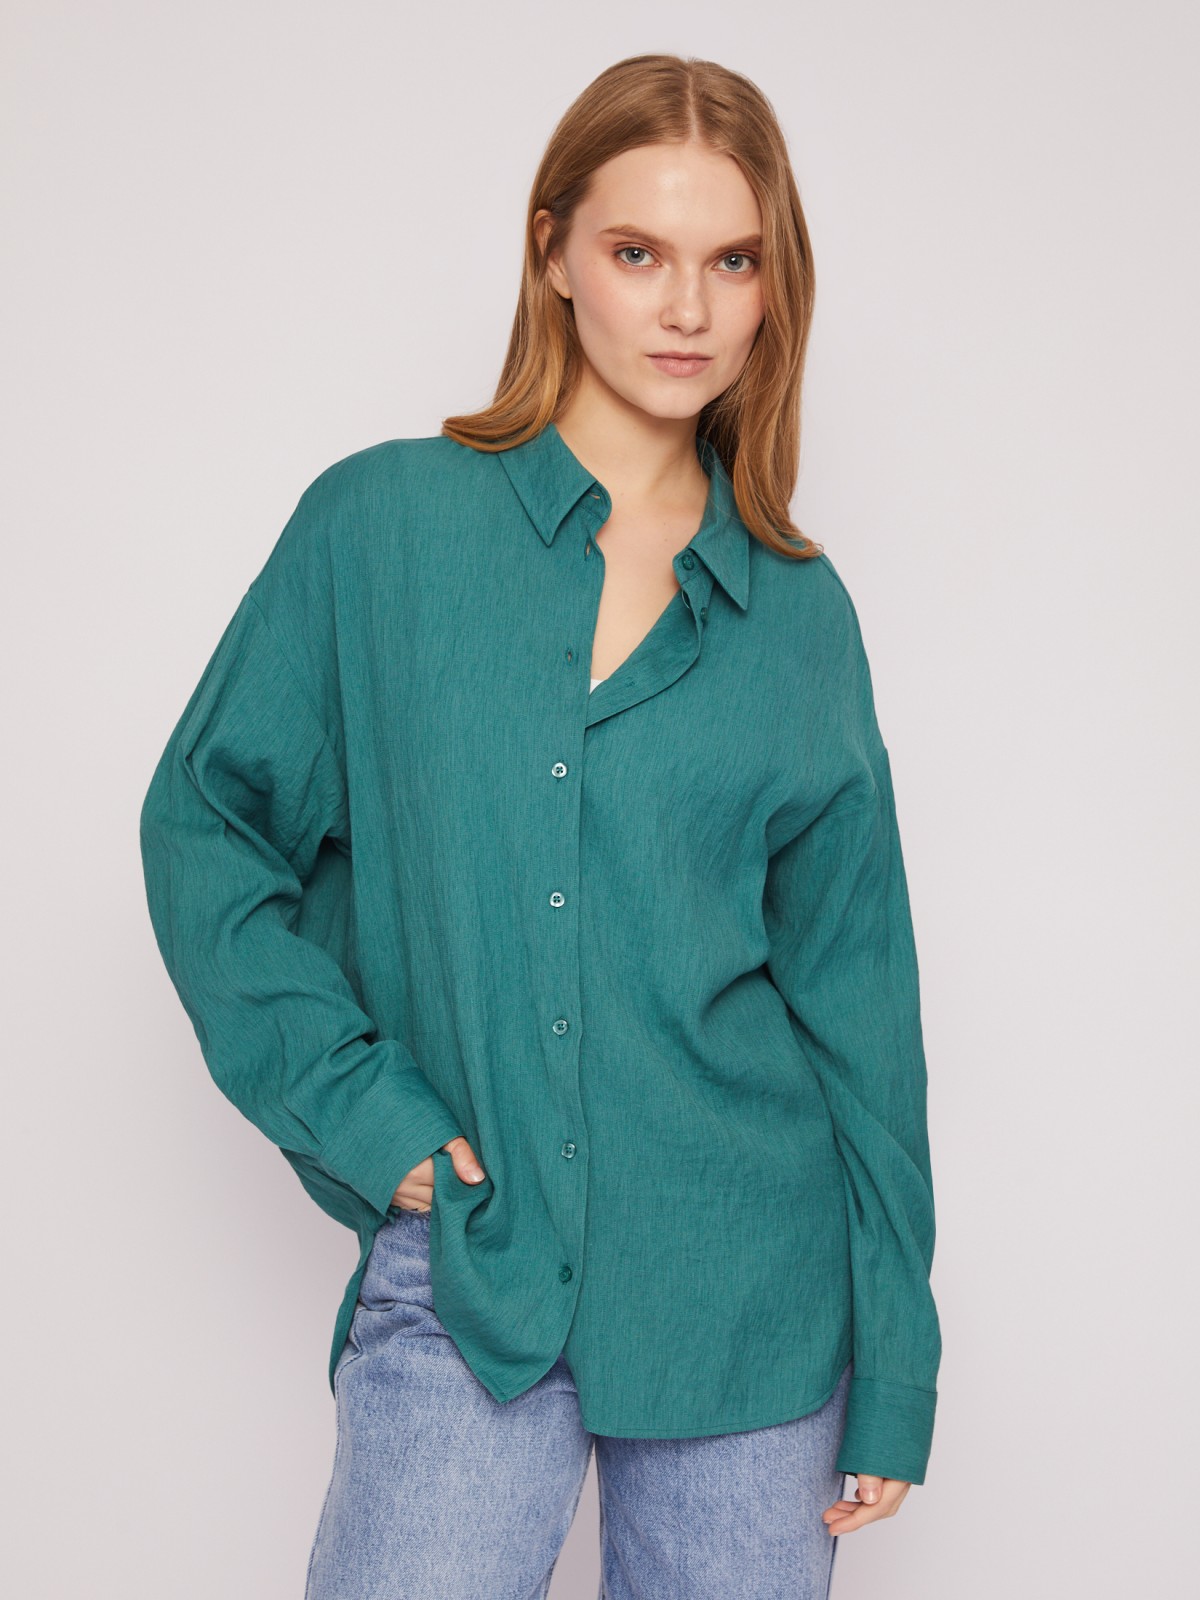 Рубашка оверсайз силуэта с длинным рукавом zolla 02421117Y022, цвет зеленый, размер XS - фото 3